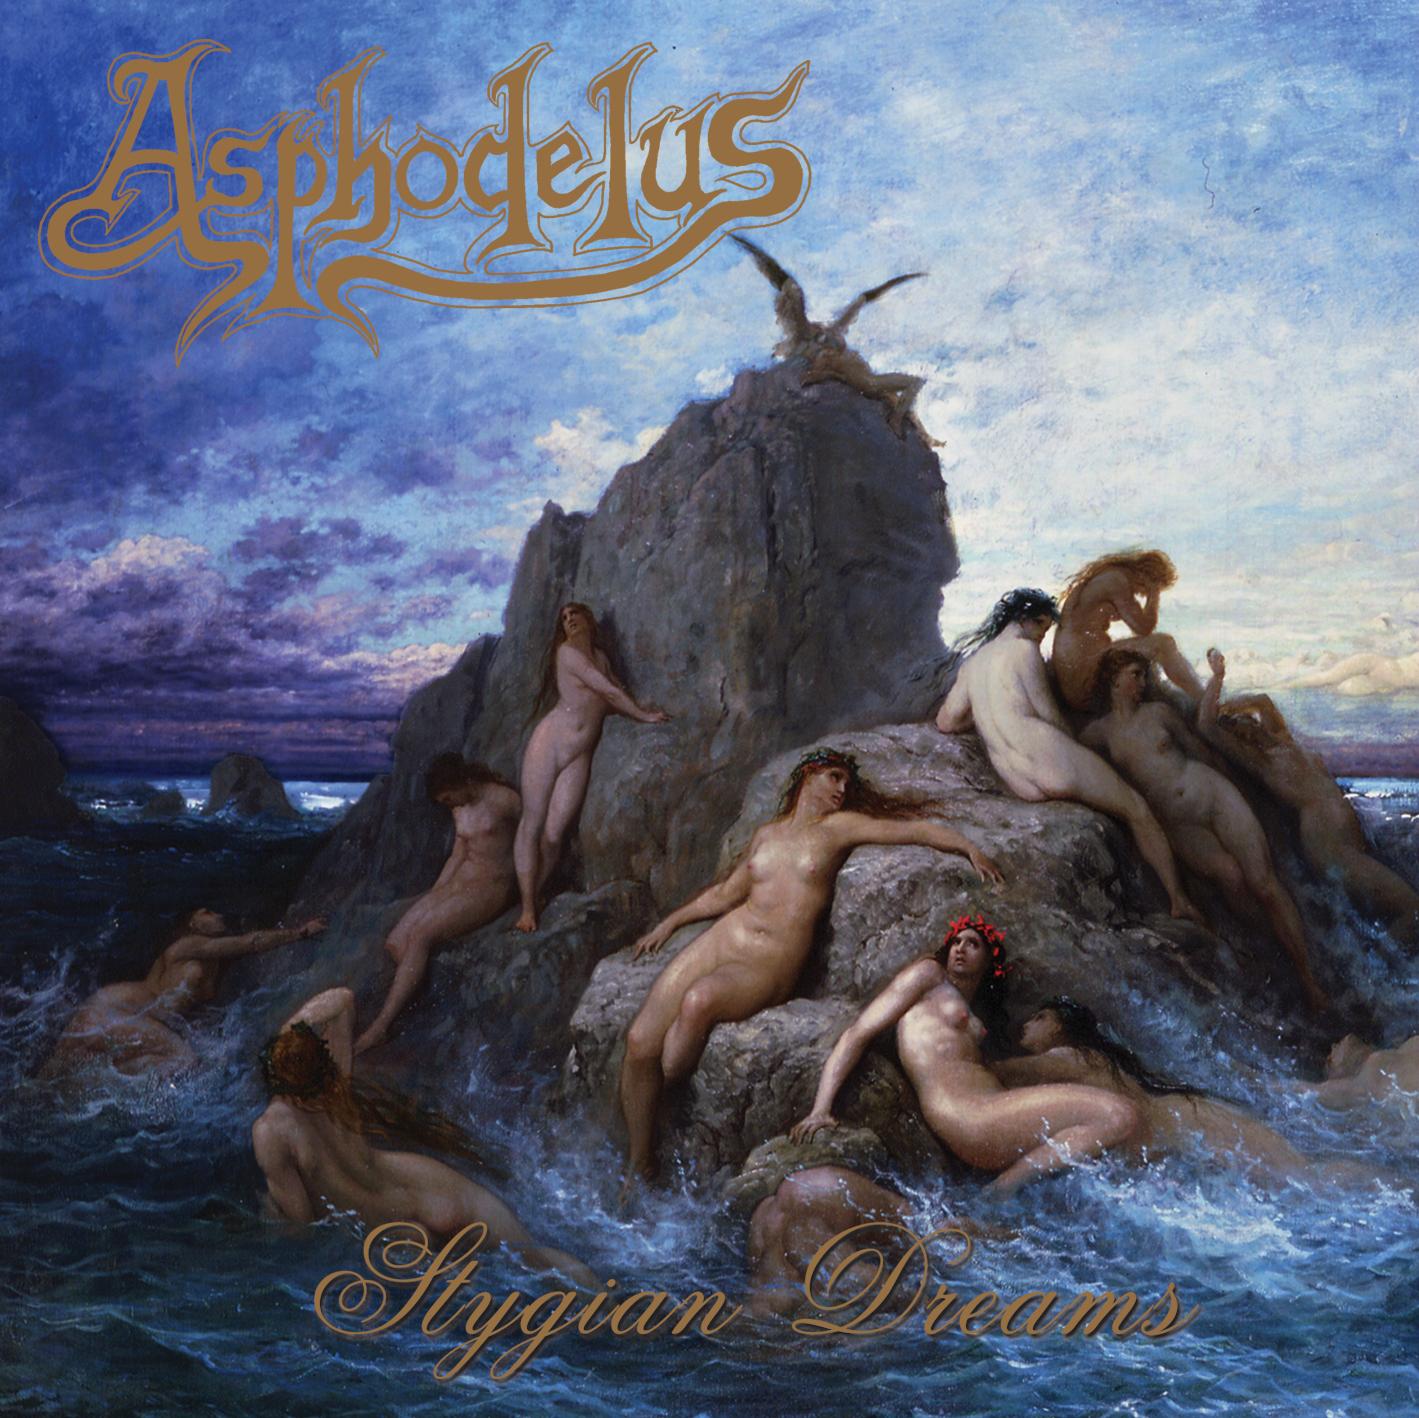 Asphodelus 2019 - Stygian Dreams